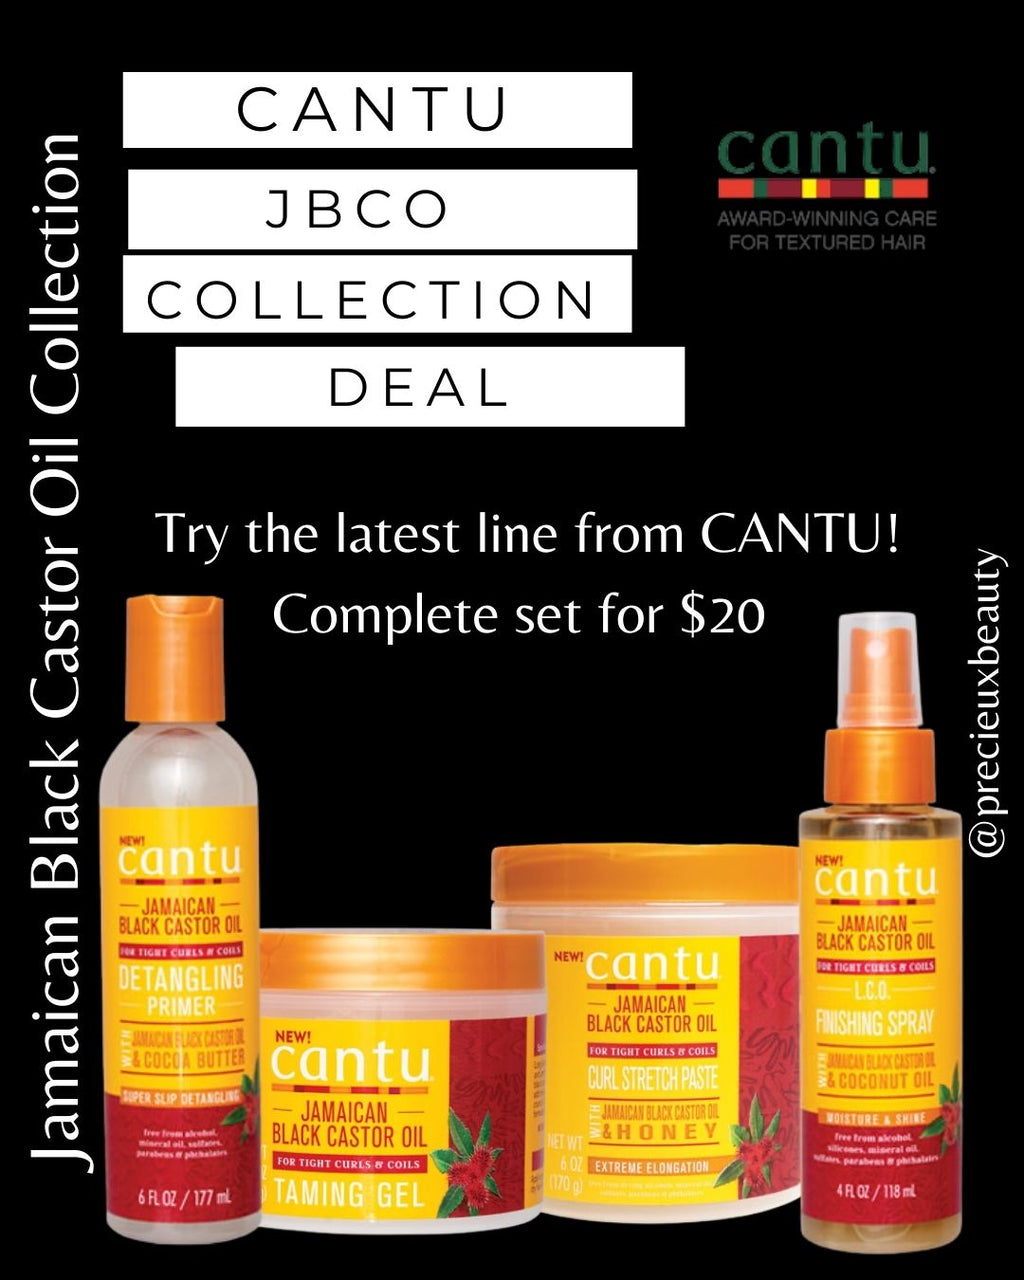 Cantu Jamaican Black Castor Oil Collection Deal